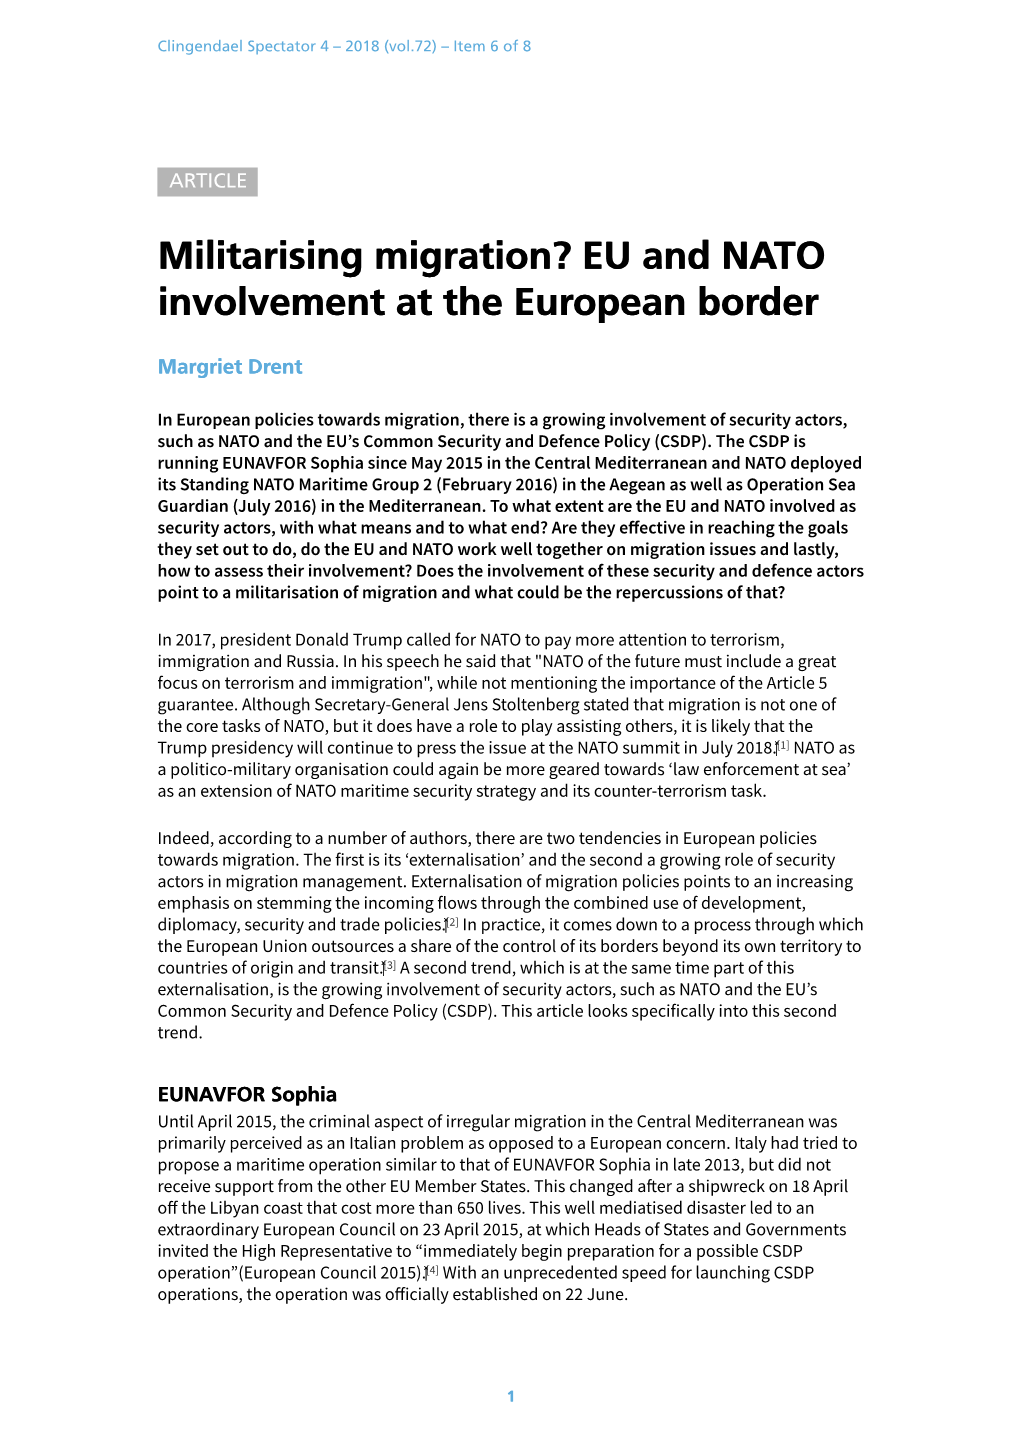 Militarising Migration? EU and NATO Involvement at the European Border